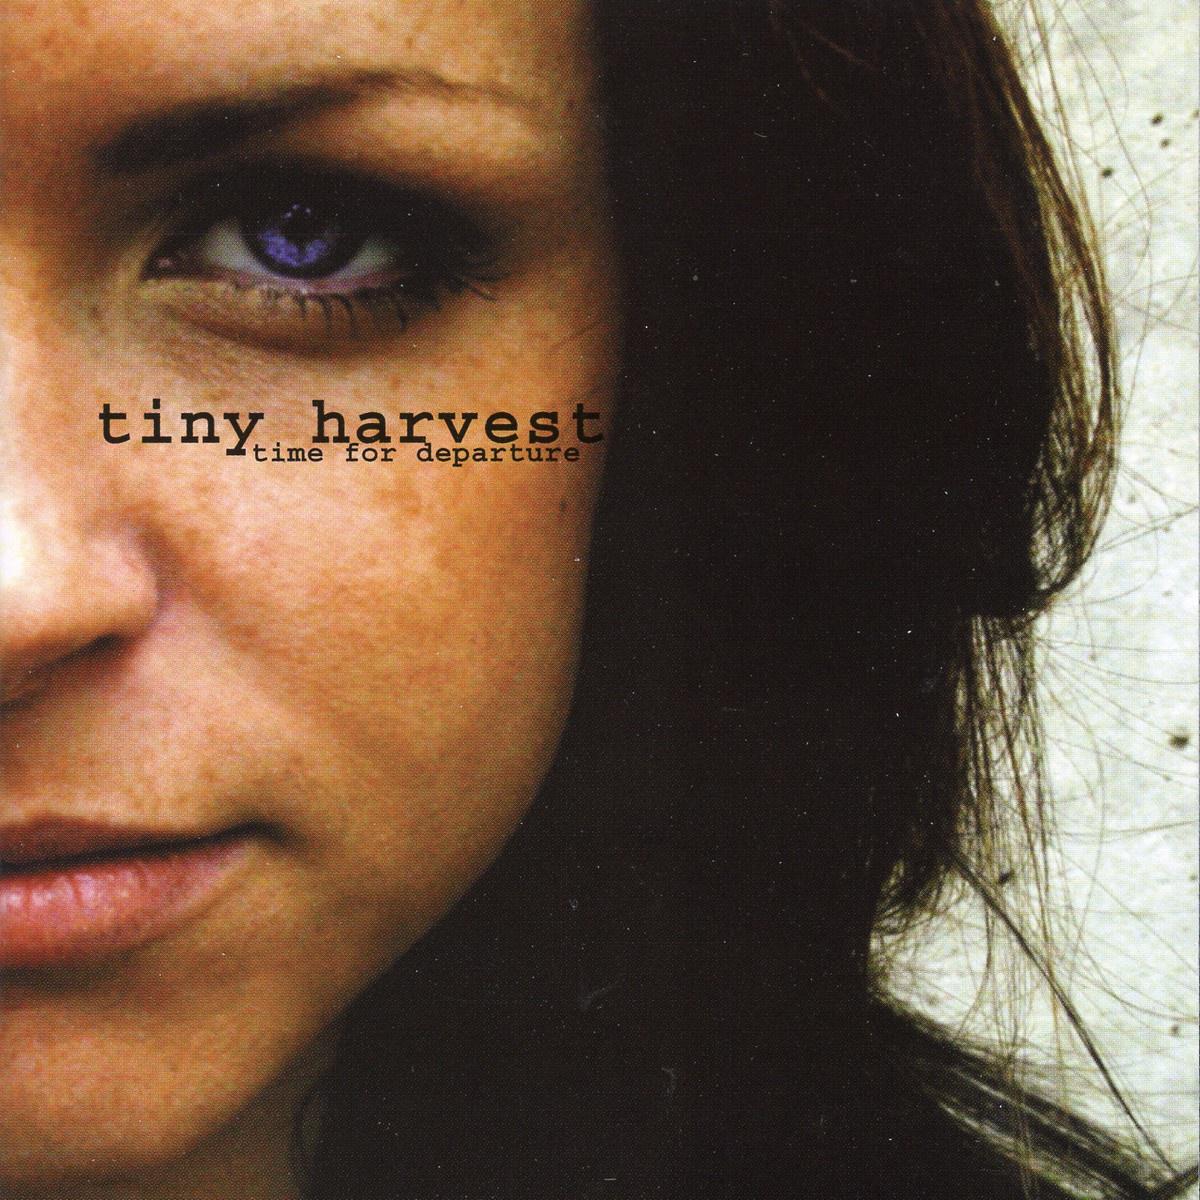 The night falls歌词 歌手Tiny Harvest-专辑Time For Departure-单曲《The night falls》LRC歌词下载